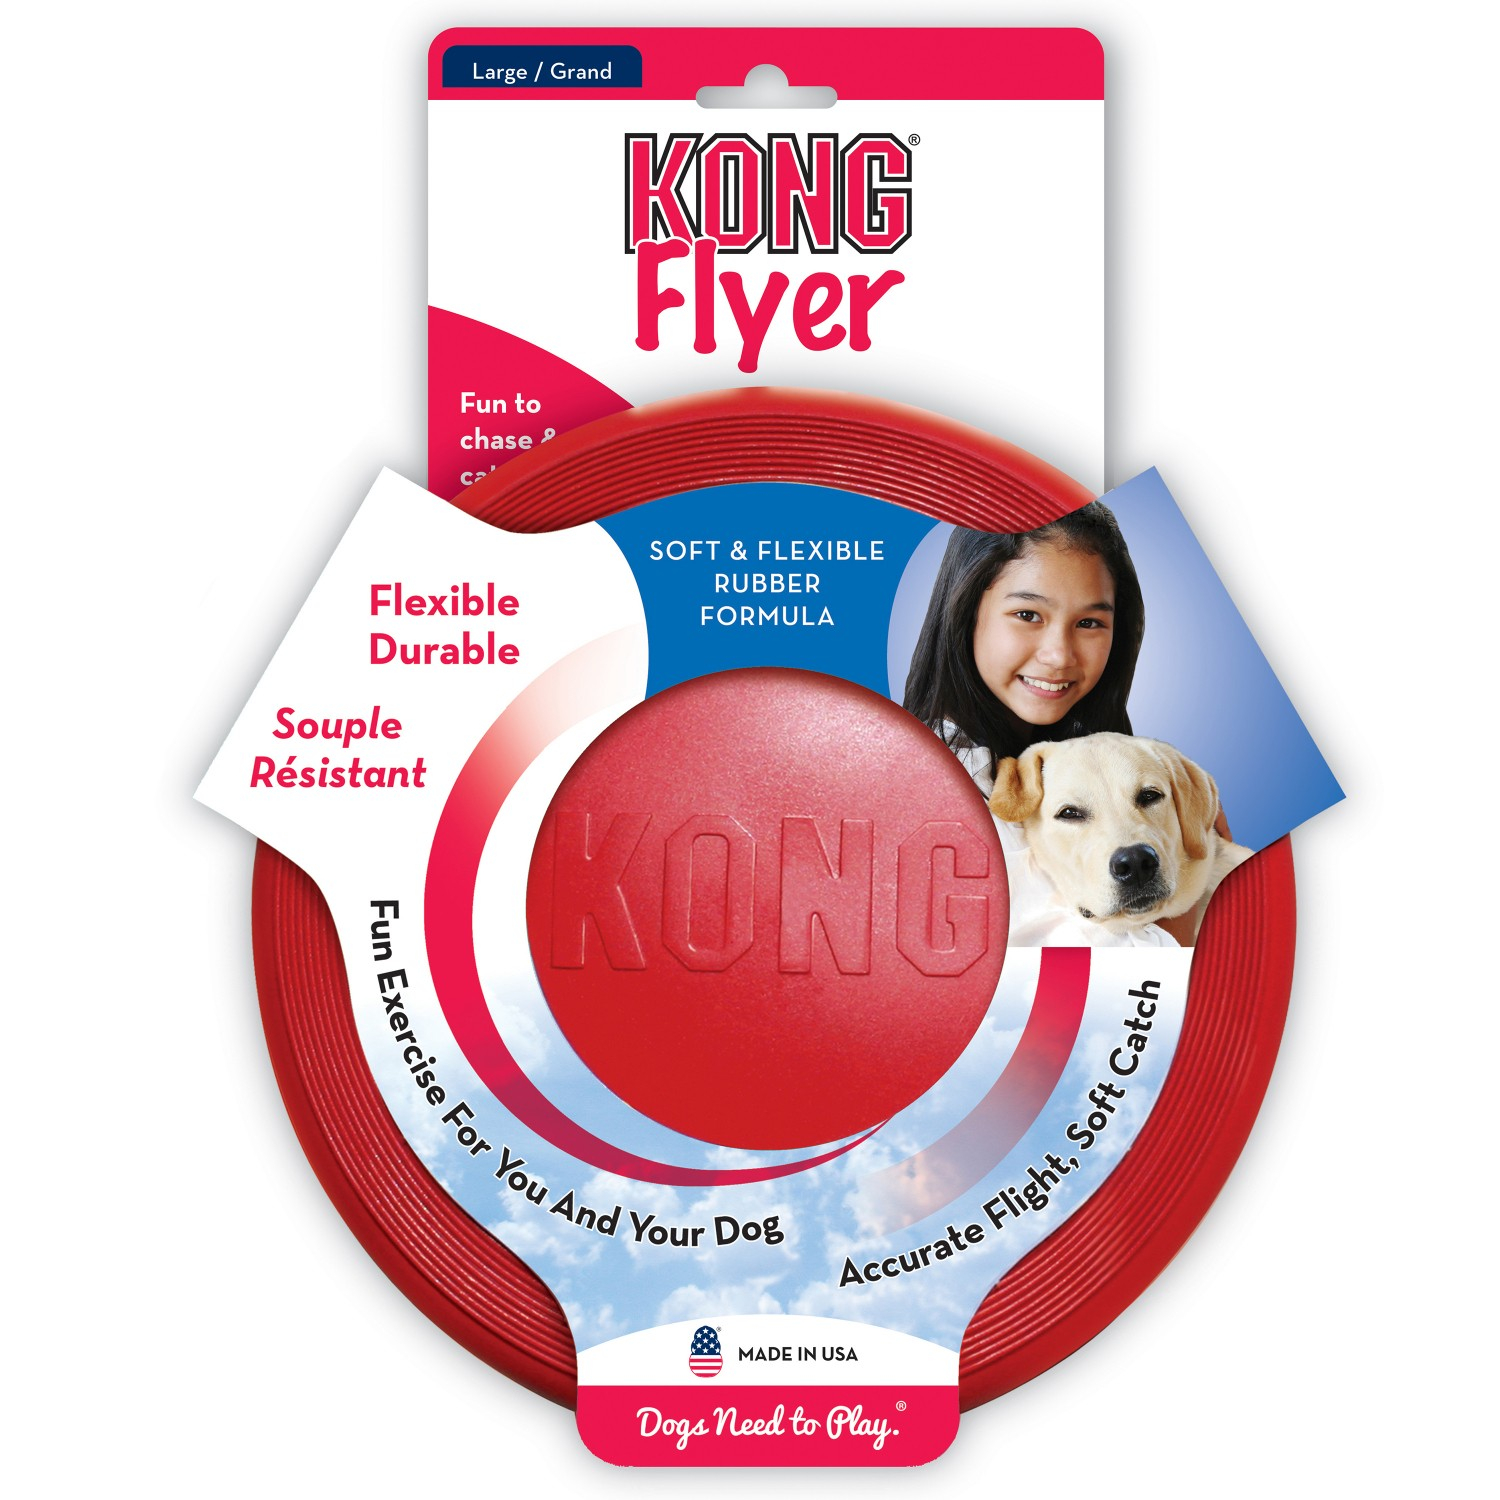 KONG cani Classic Flyer 2 taglie - frisbee flessibile e resistente